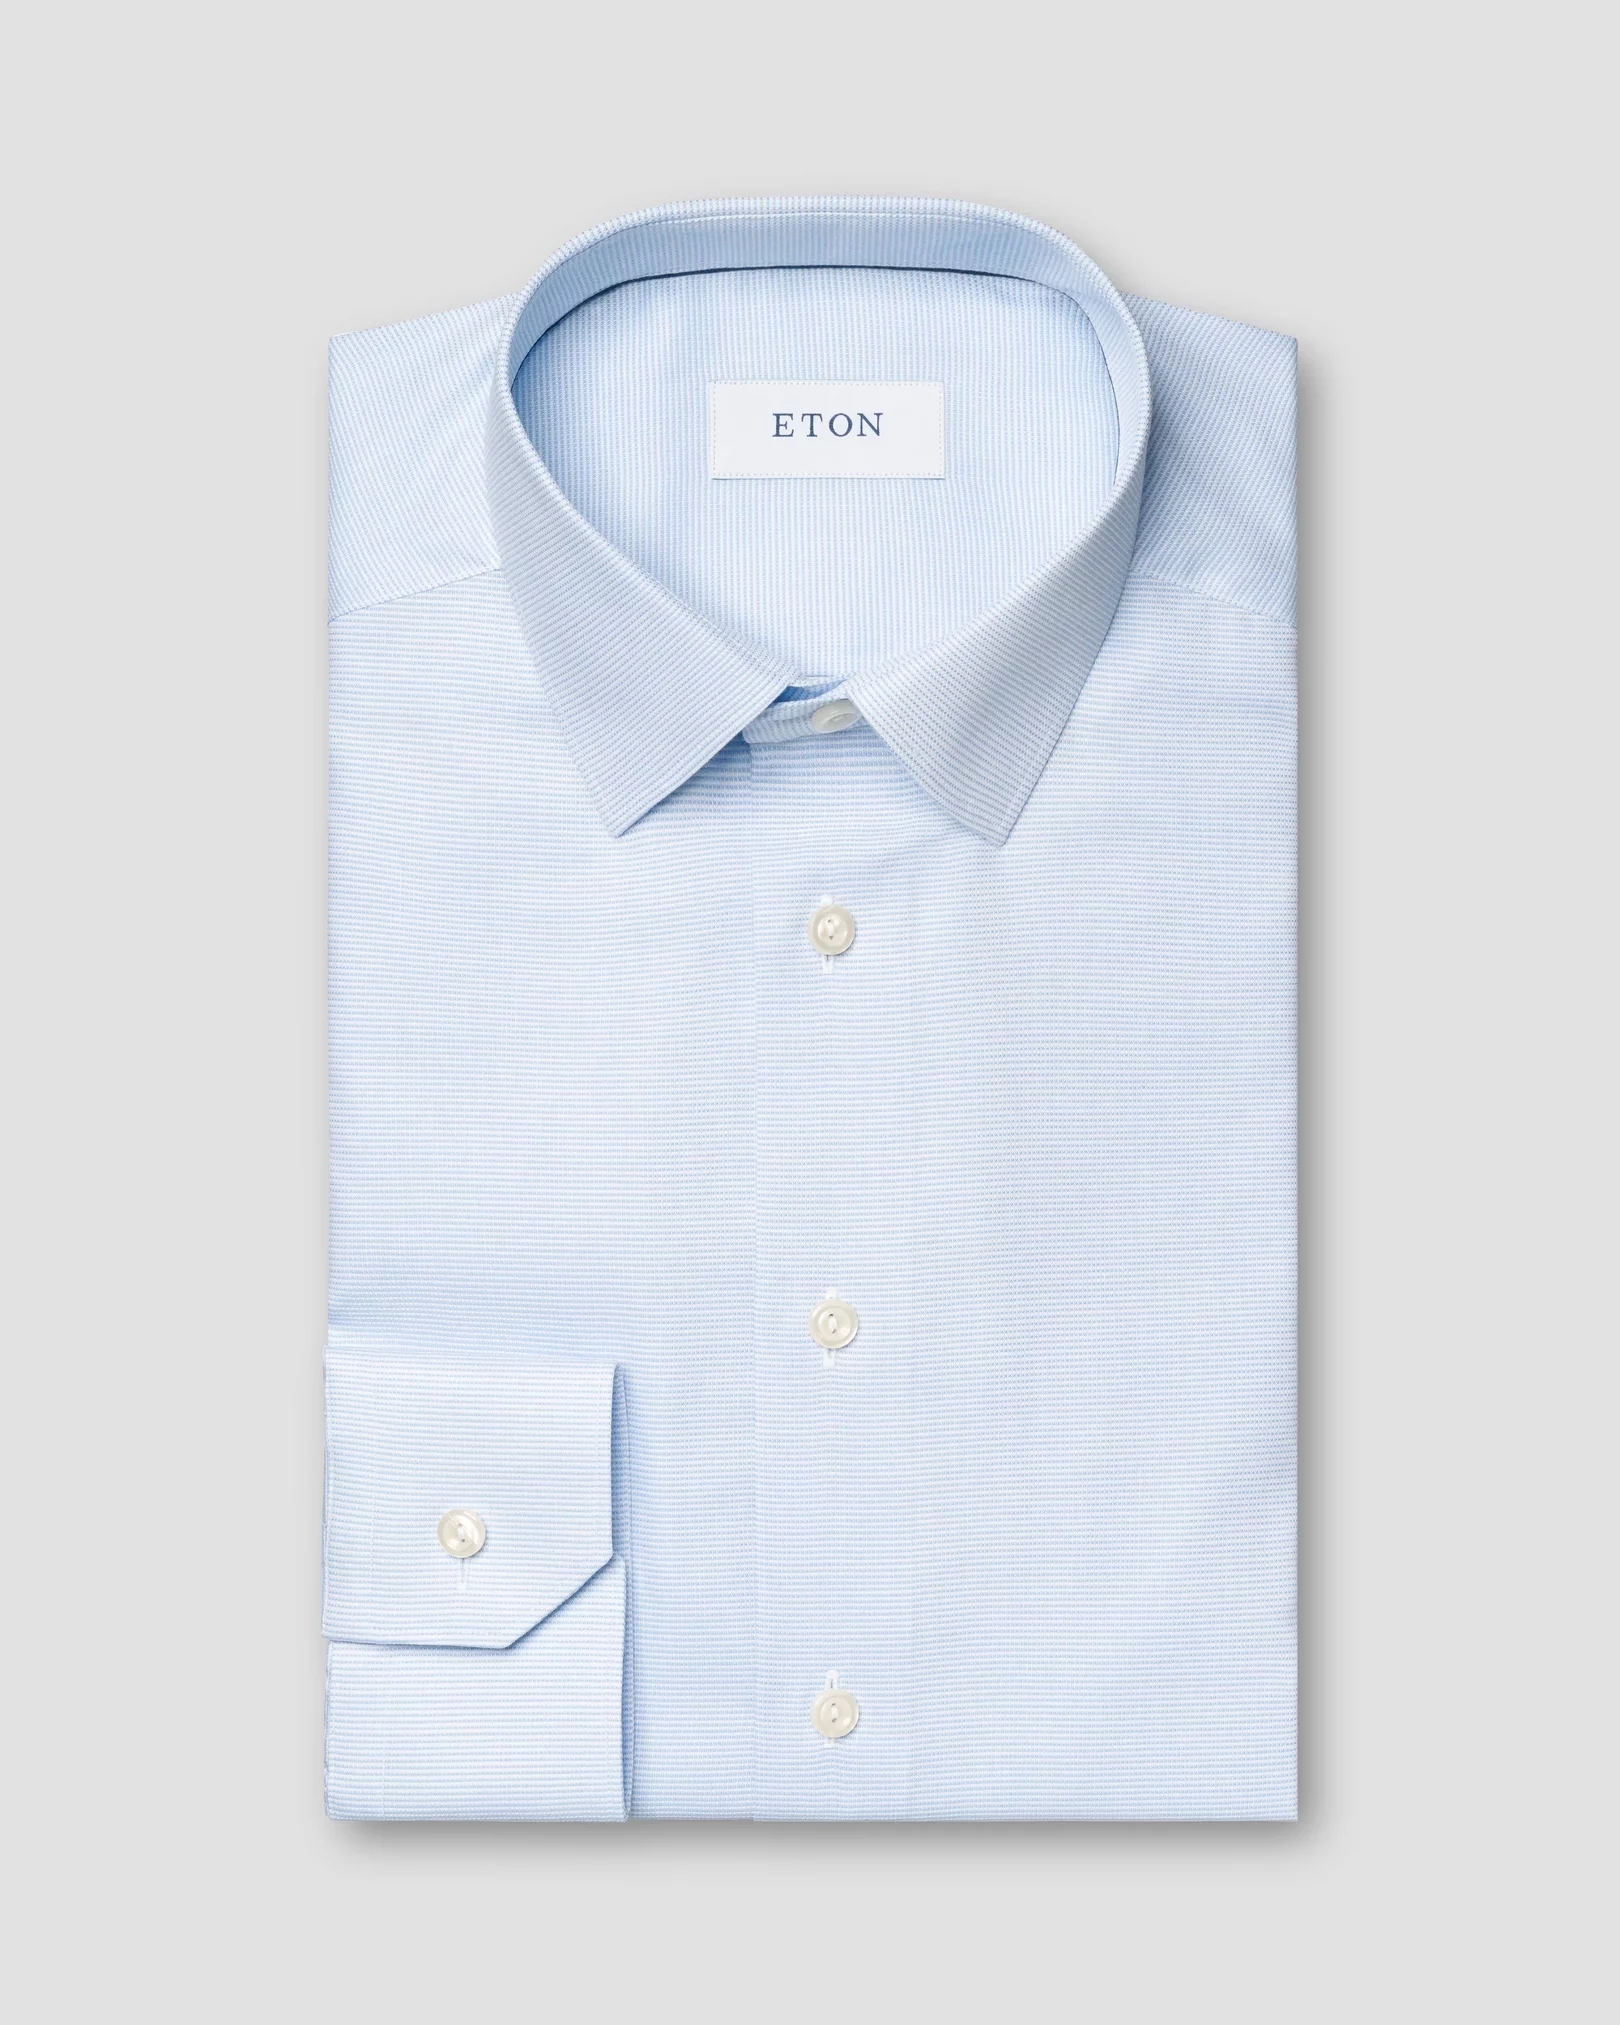 Eton - solid light blue ponited shirt